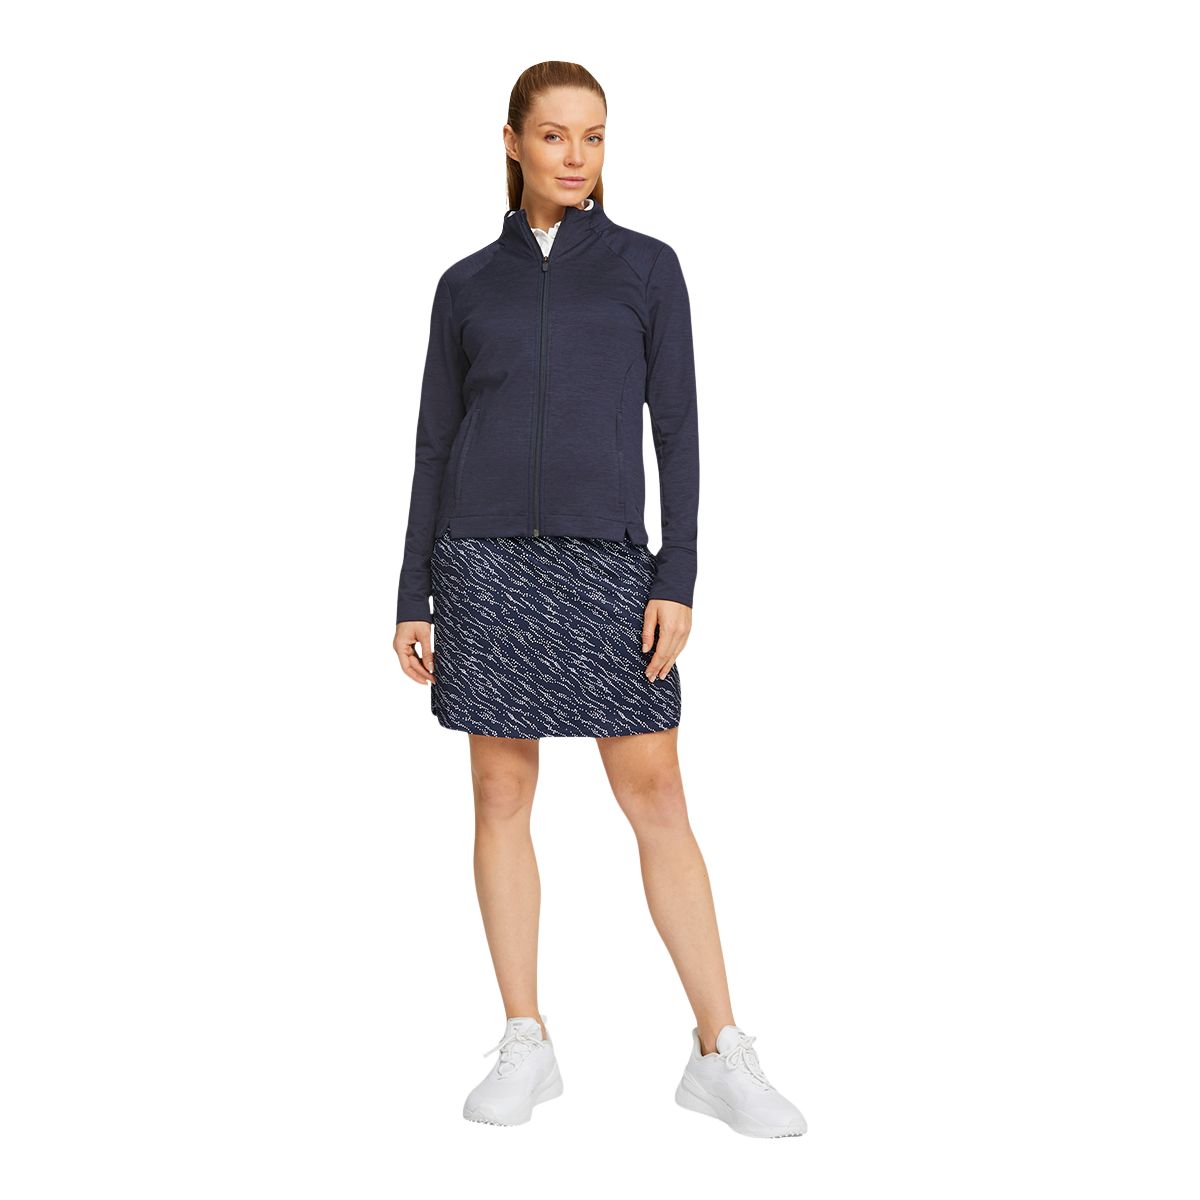 Under Armour Golf Women's Storm Sweater Fleece 1/2 Zip Long Sleeve Top